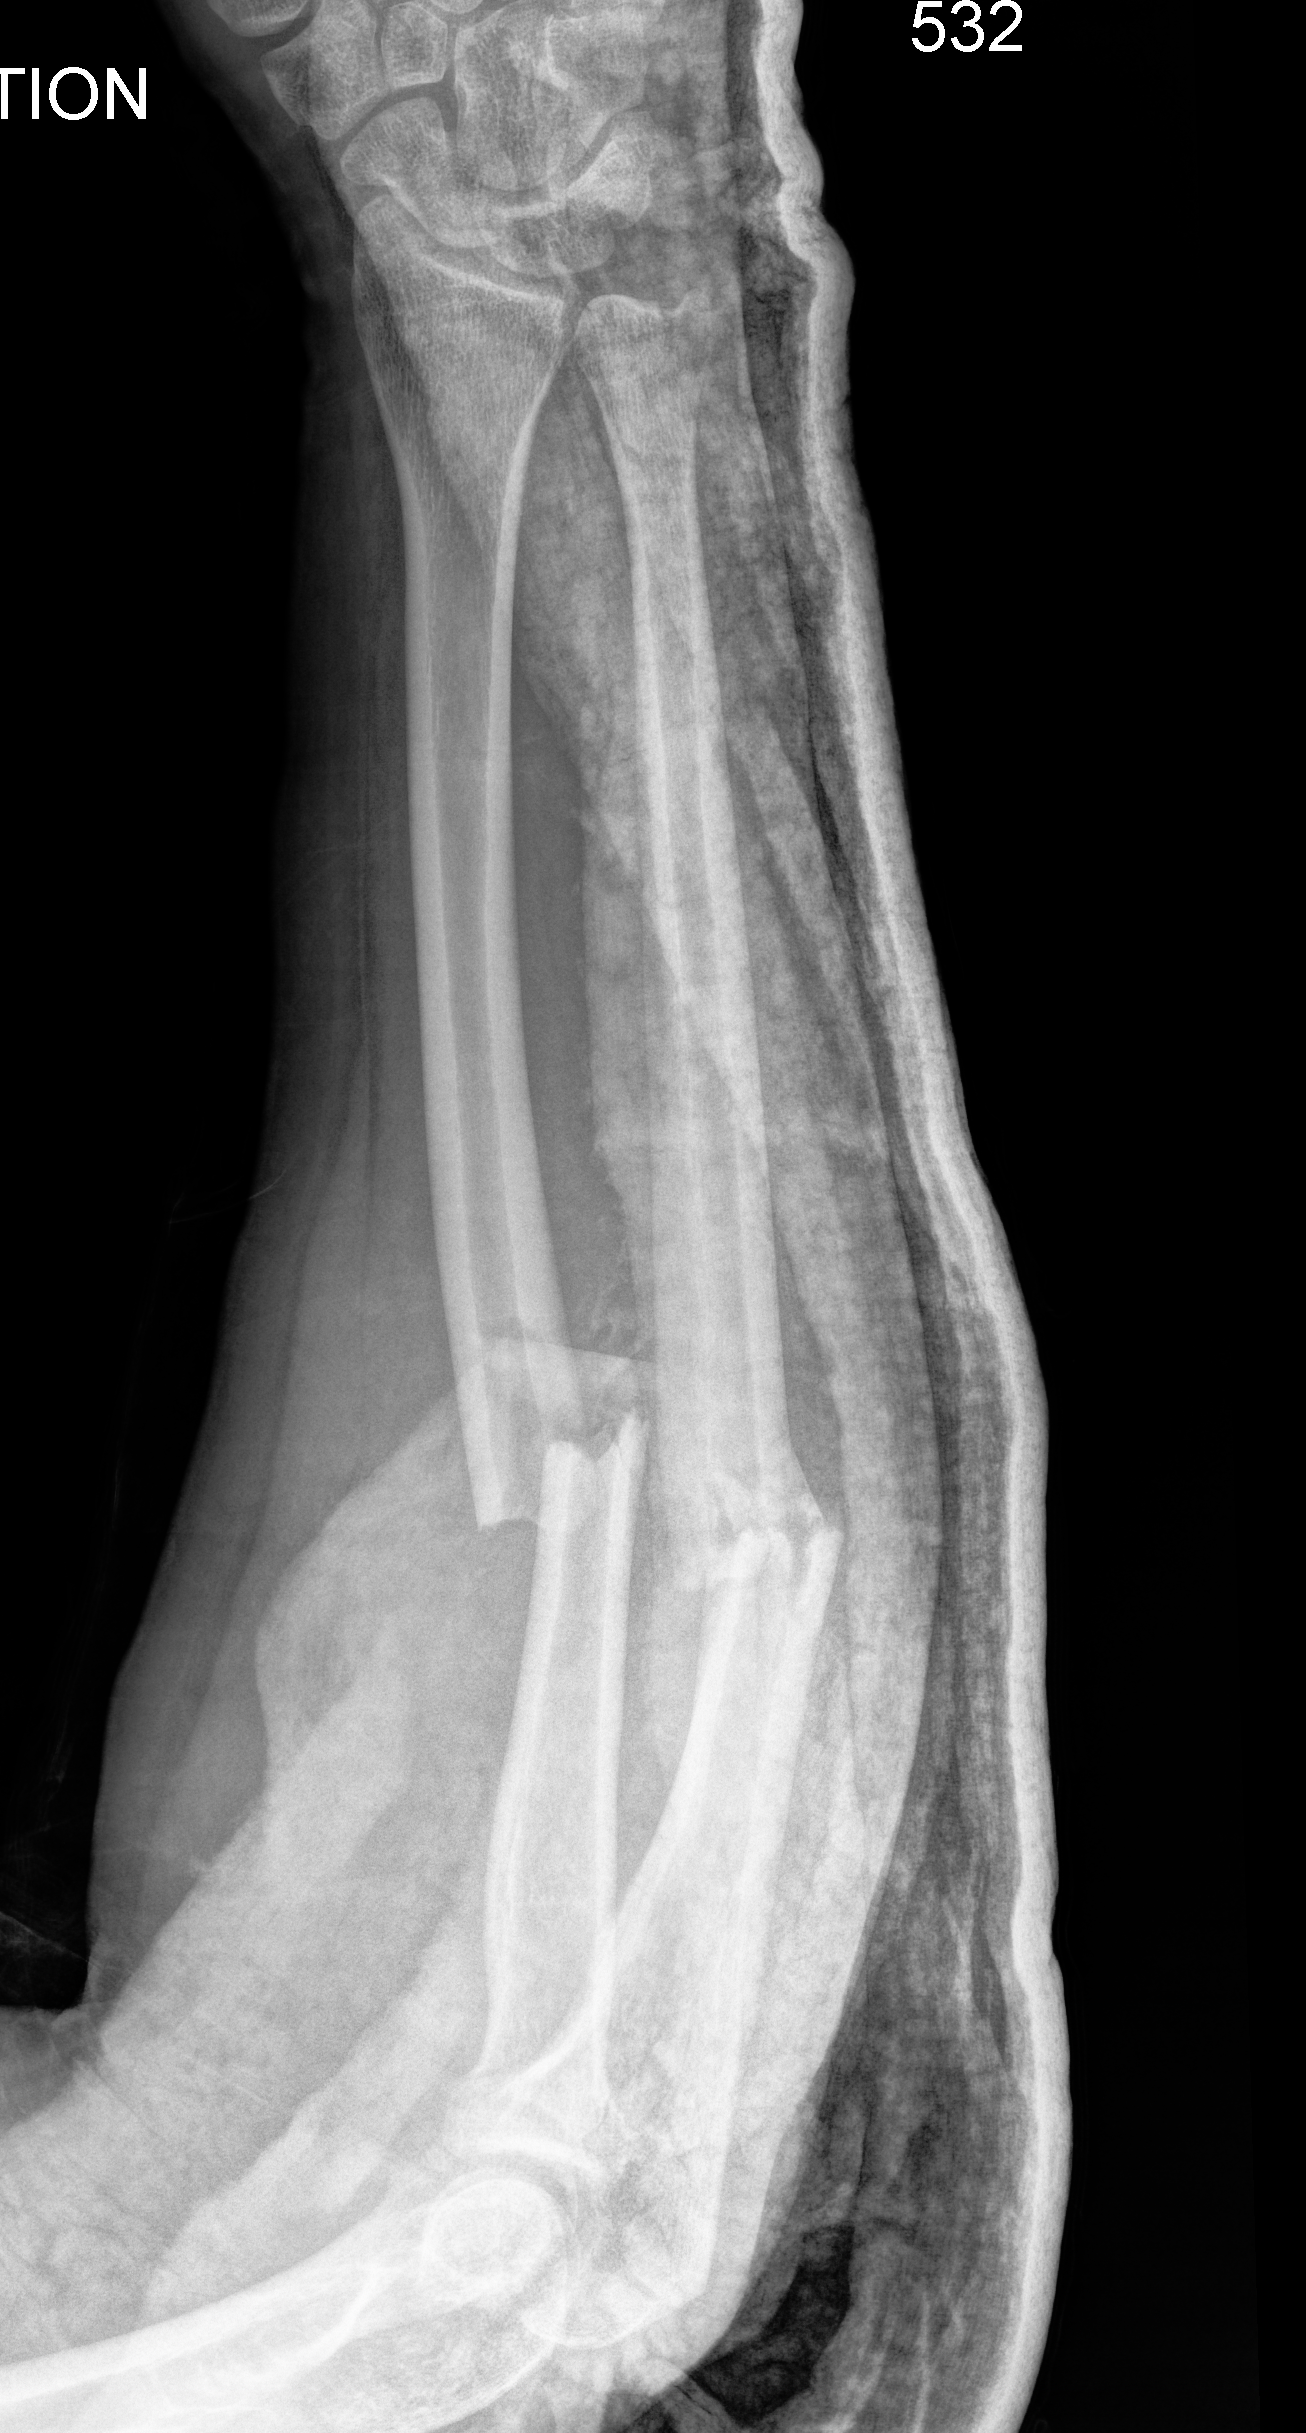 Bone bone forearm fracture AP